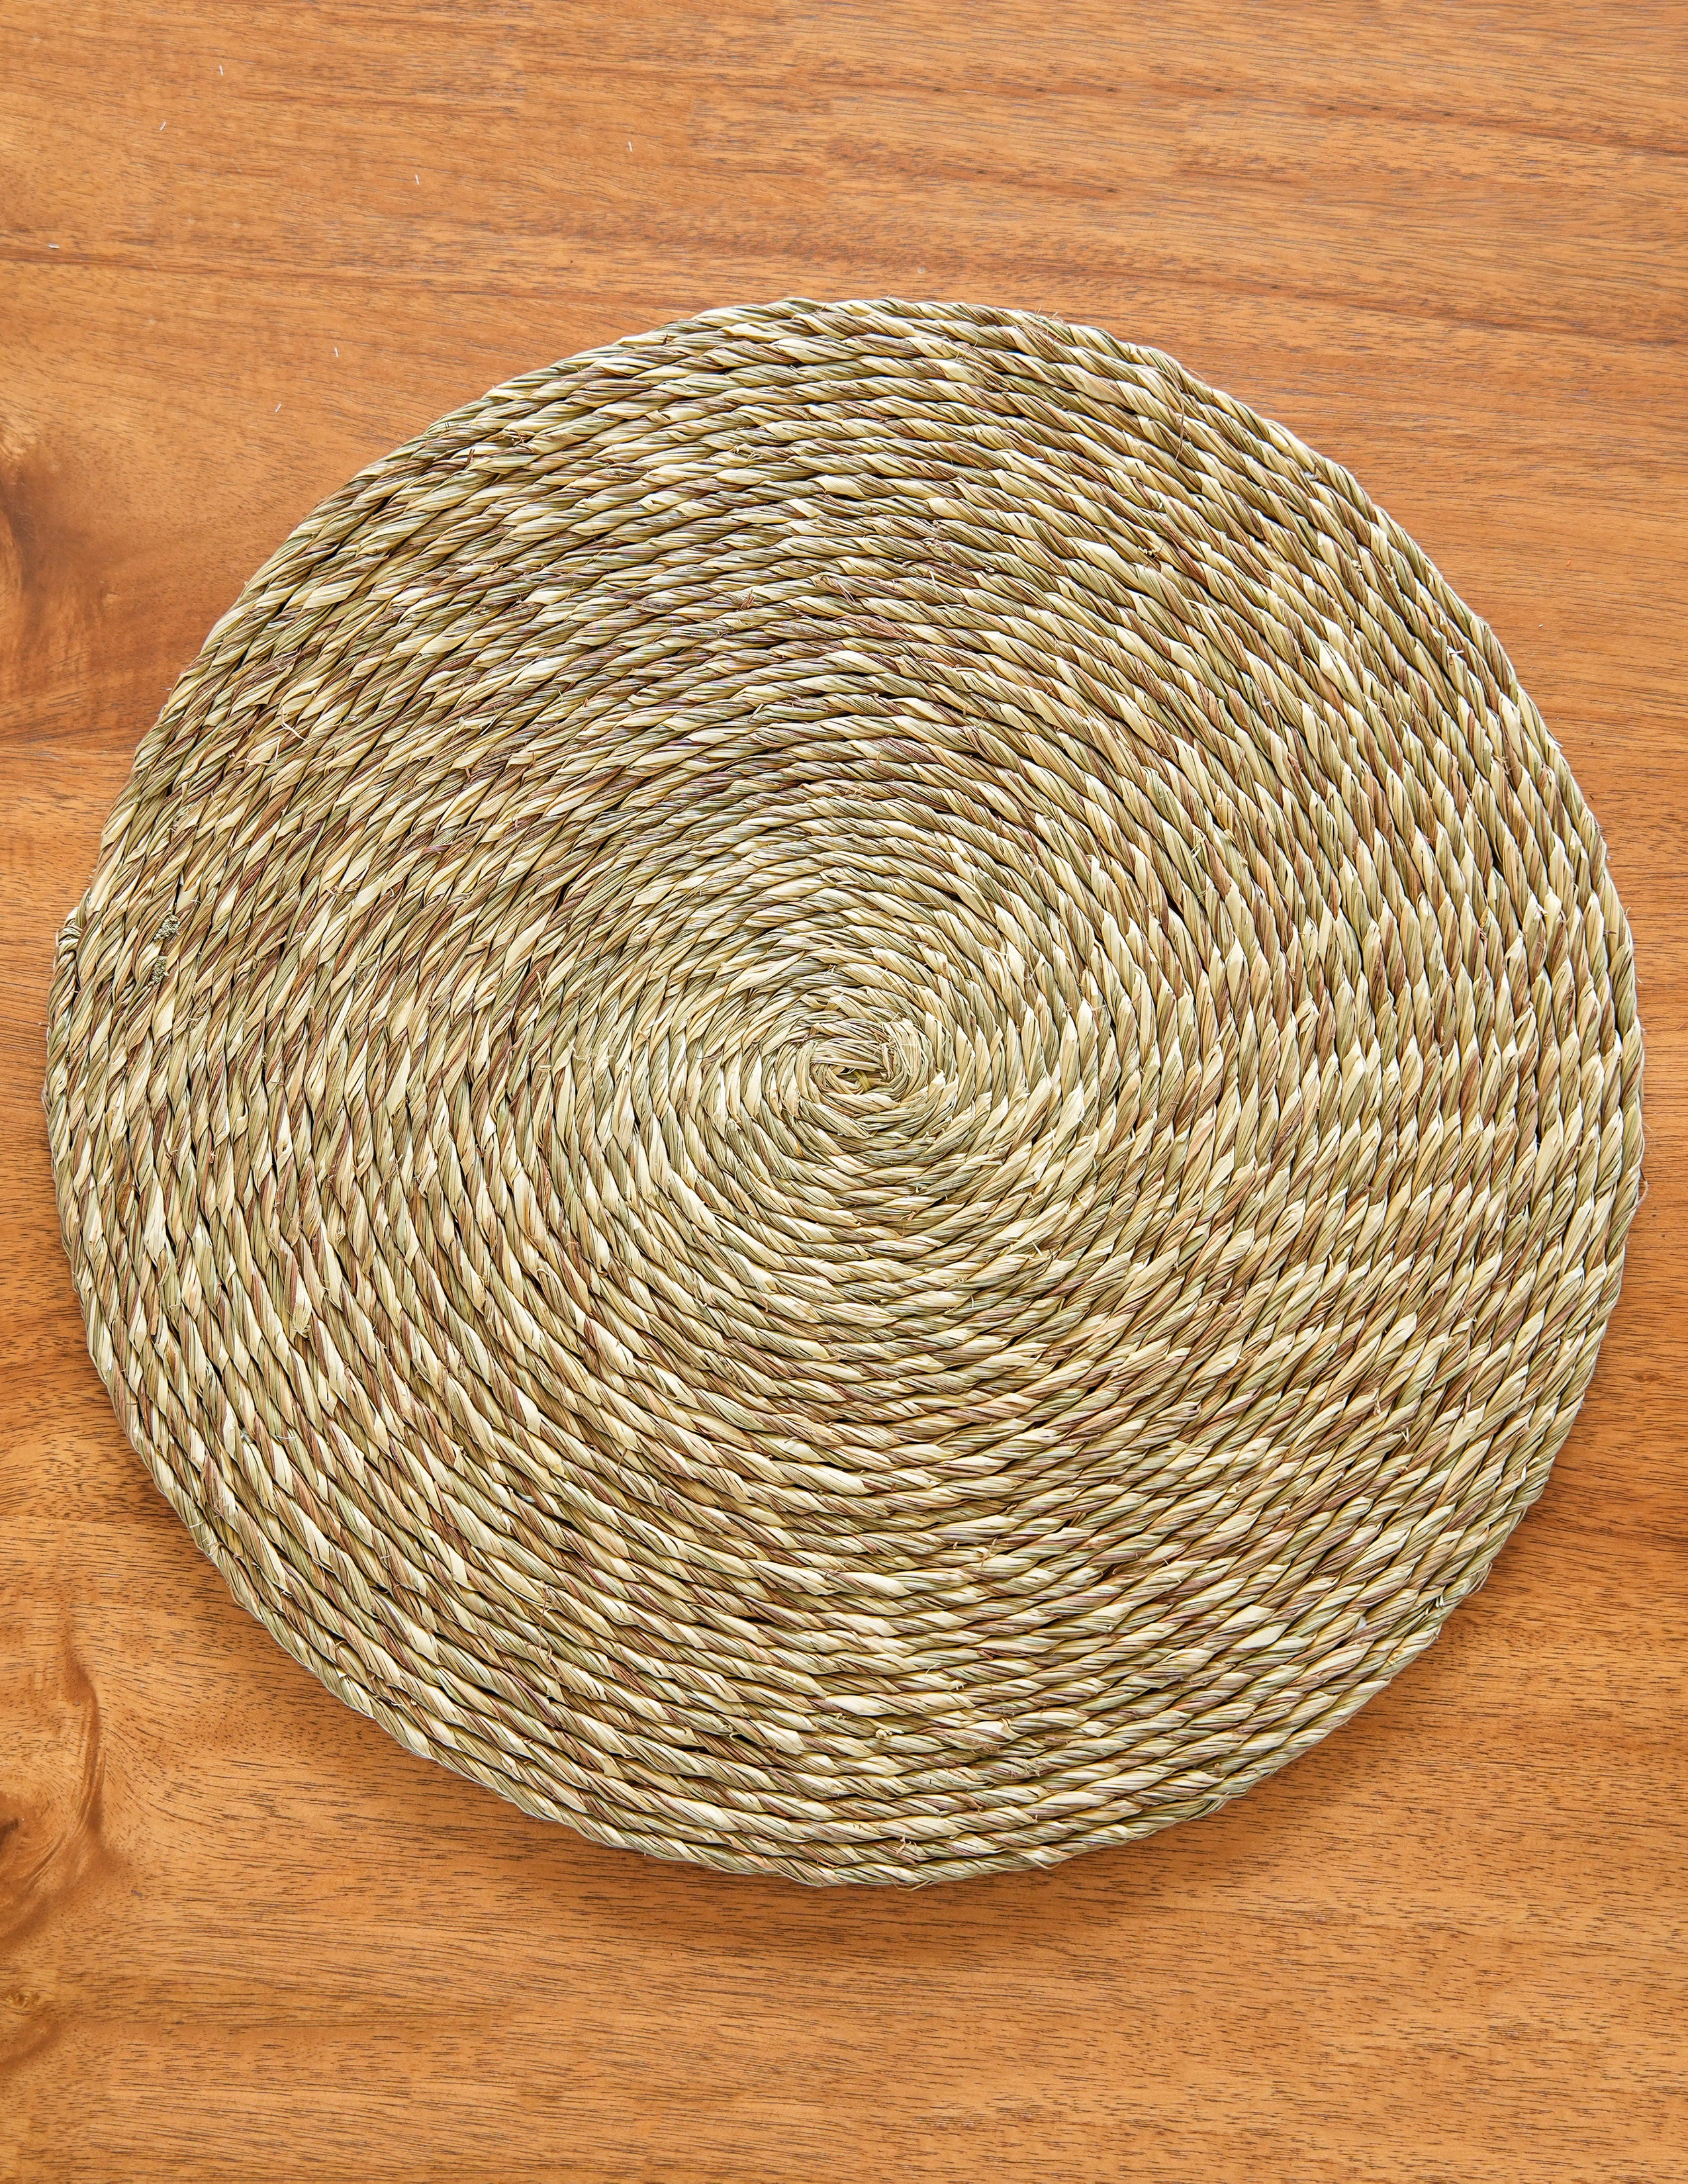 Handmade Sabai Grass Round Mats- Set of 4